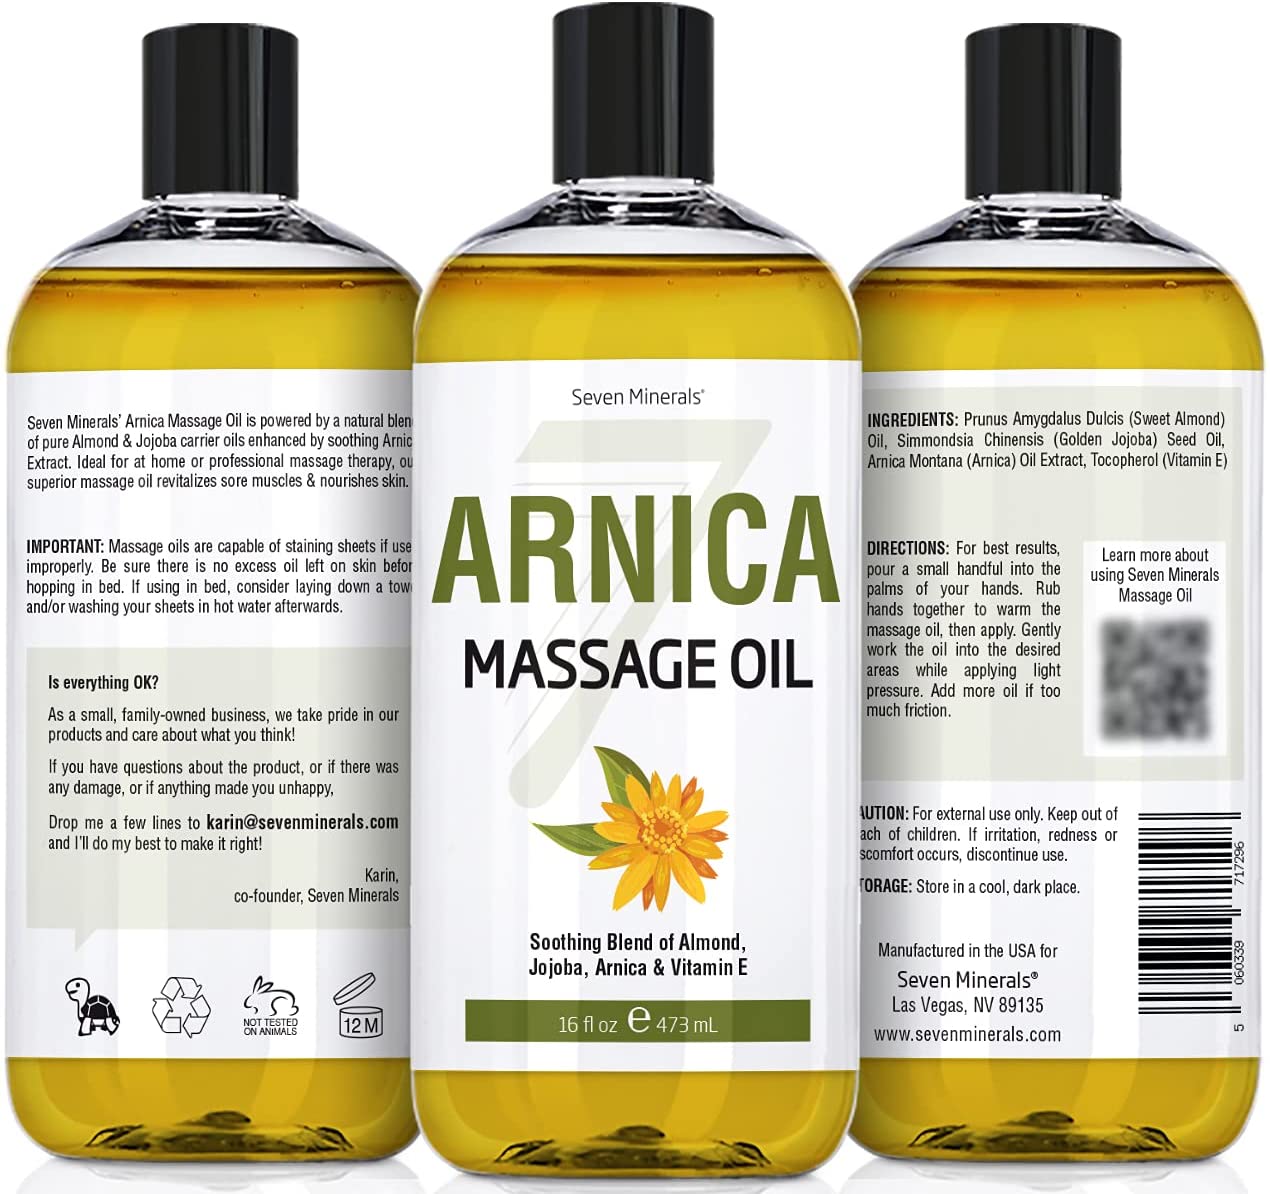 arnica massage oil